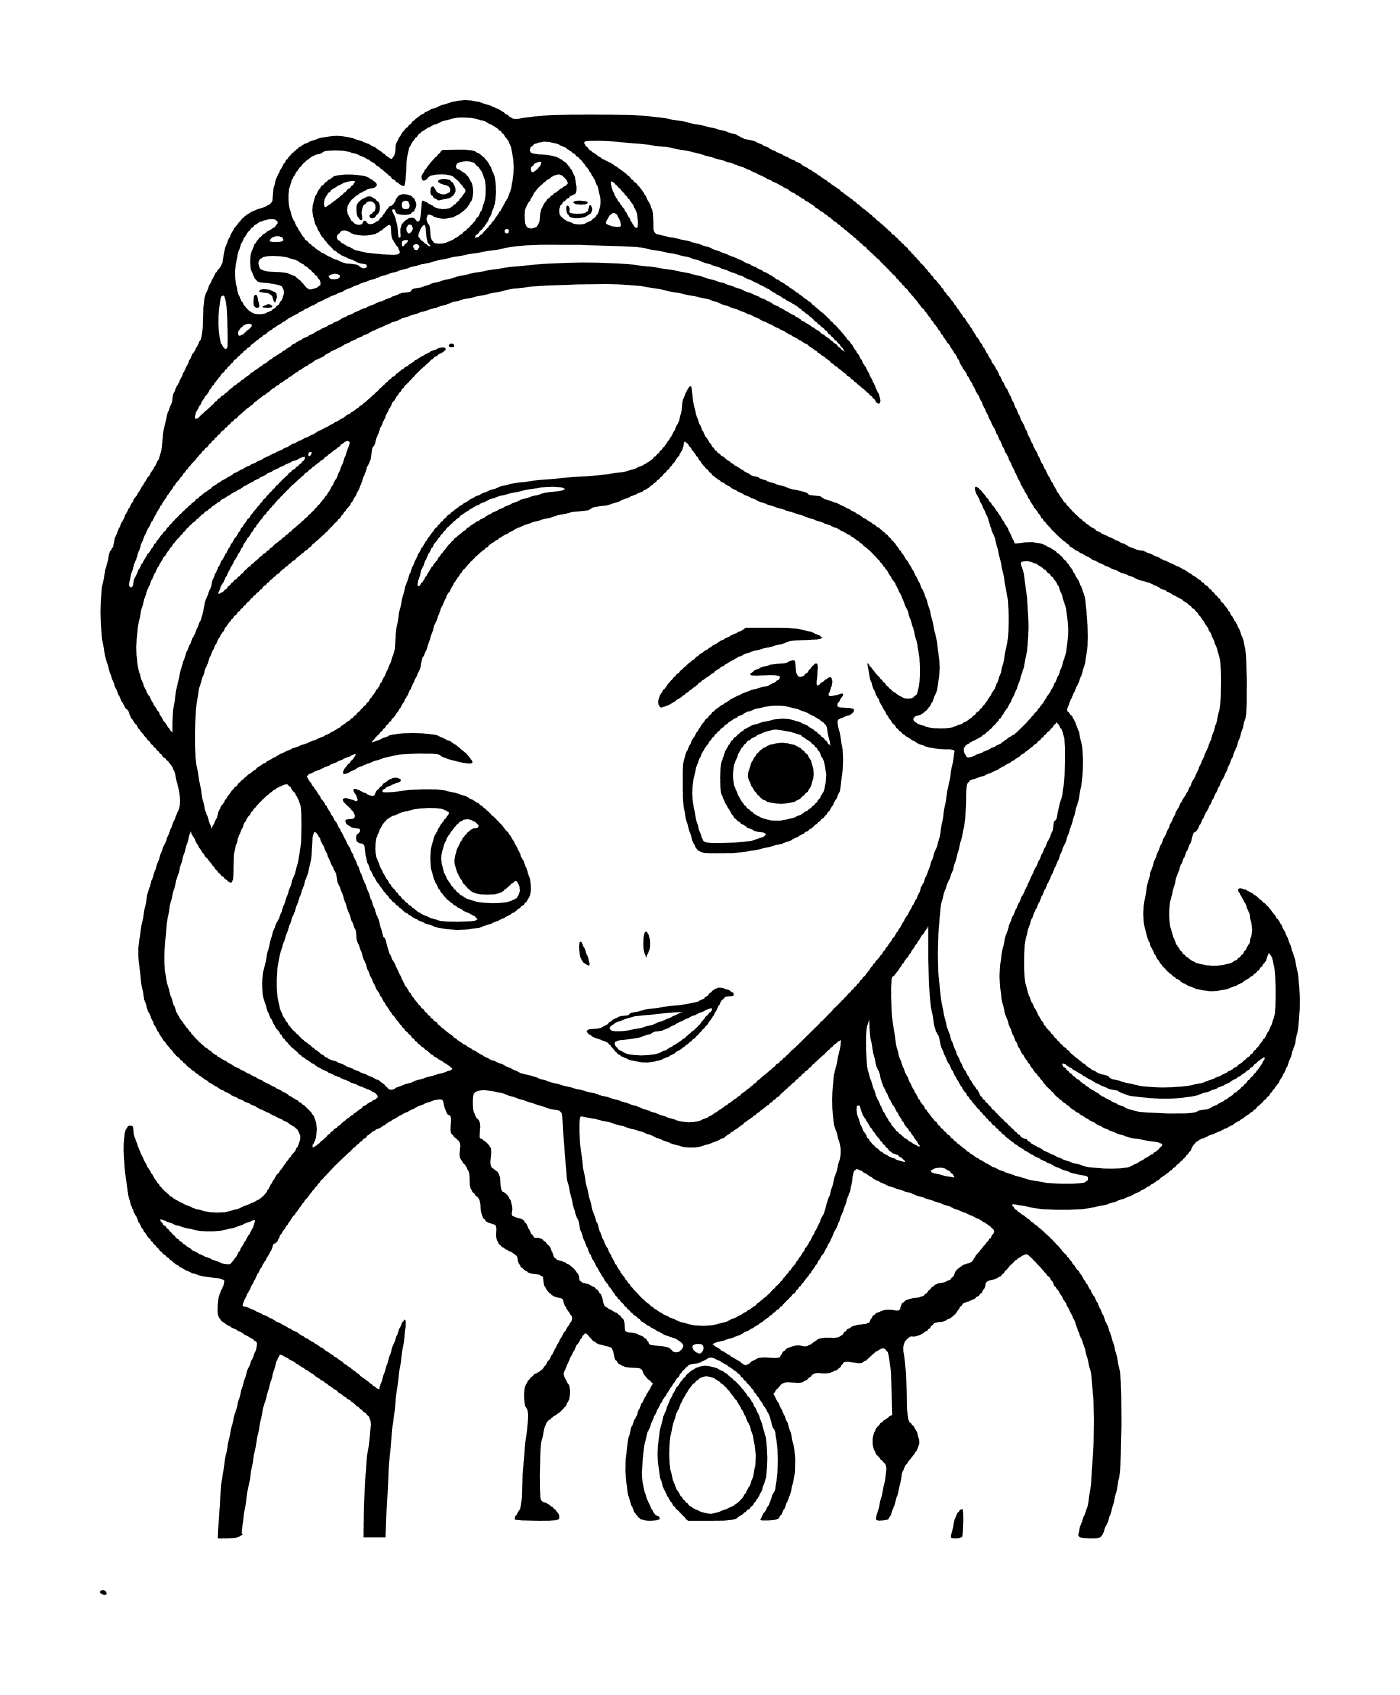  राजकुमारी सोफिया का चेहरा, चित्र का चेहरा 